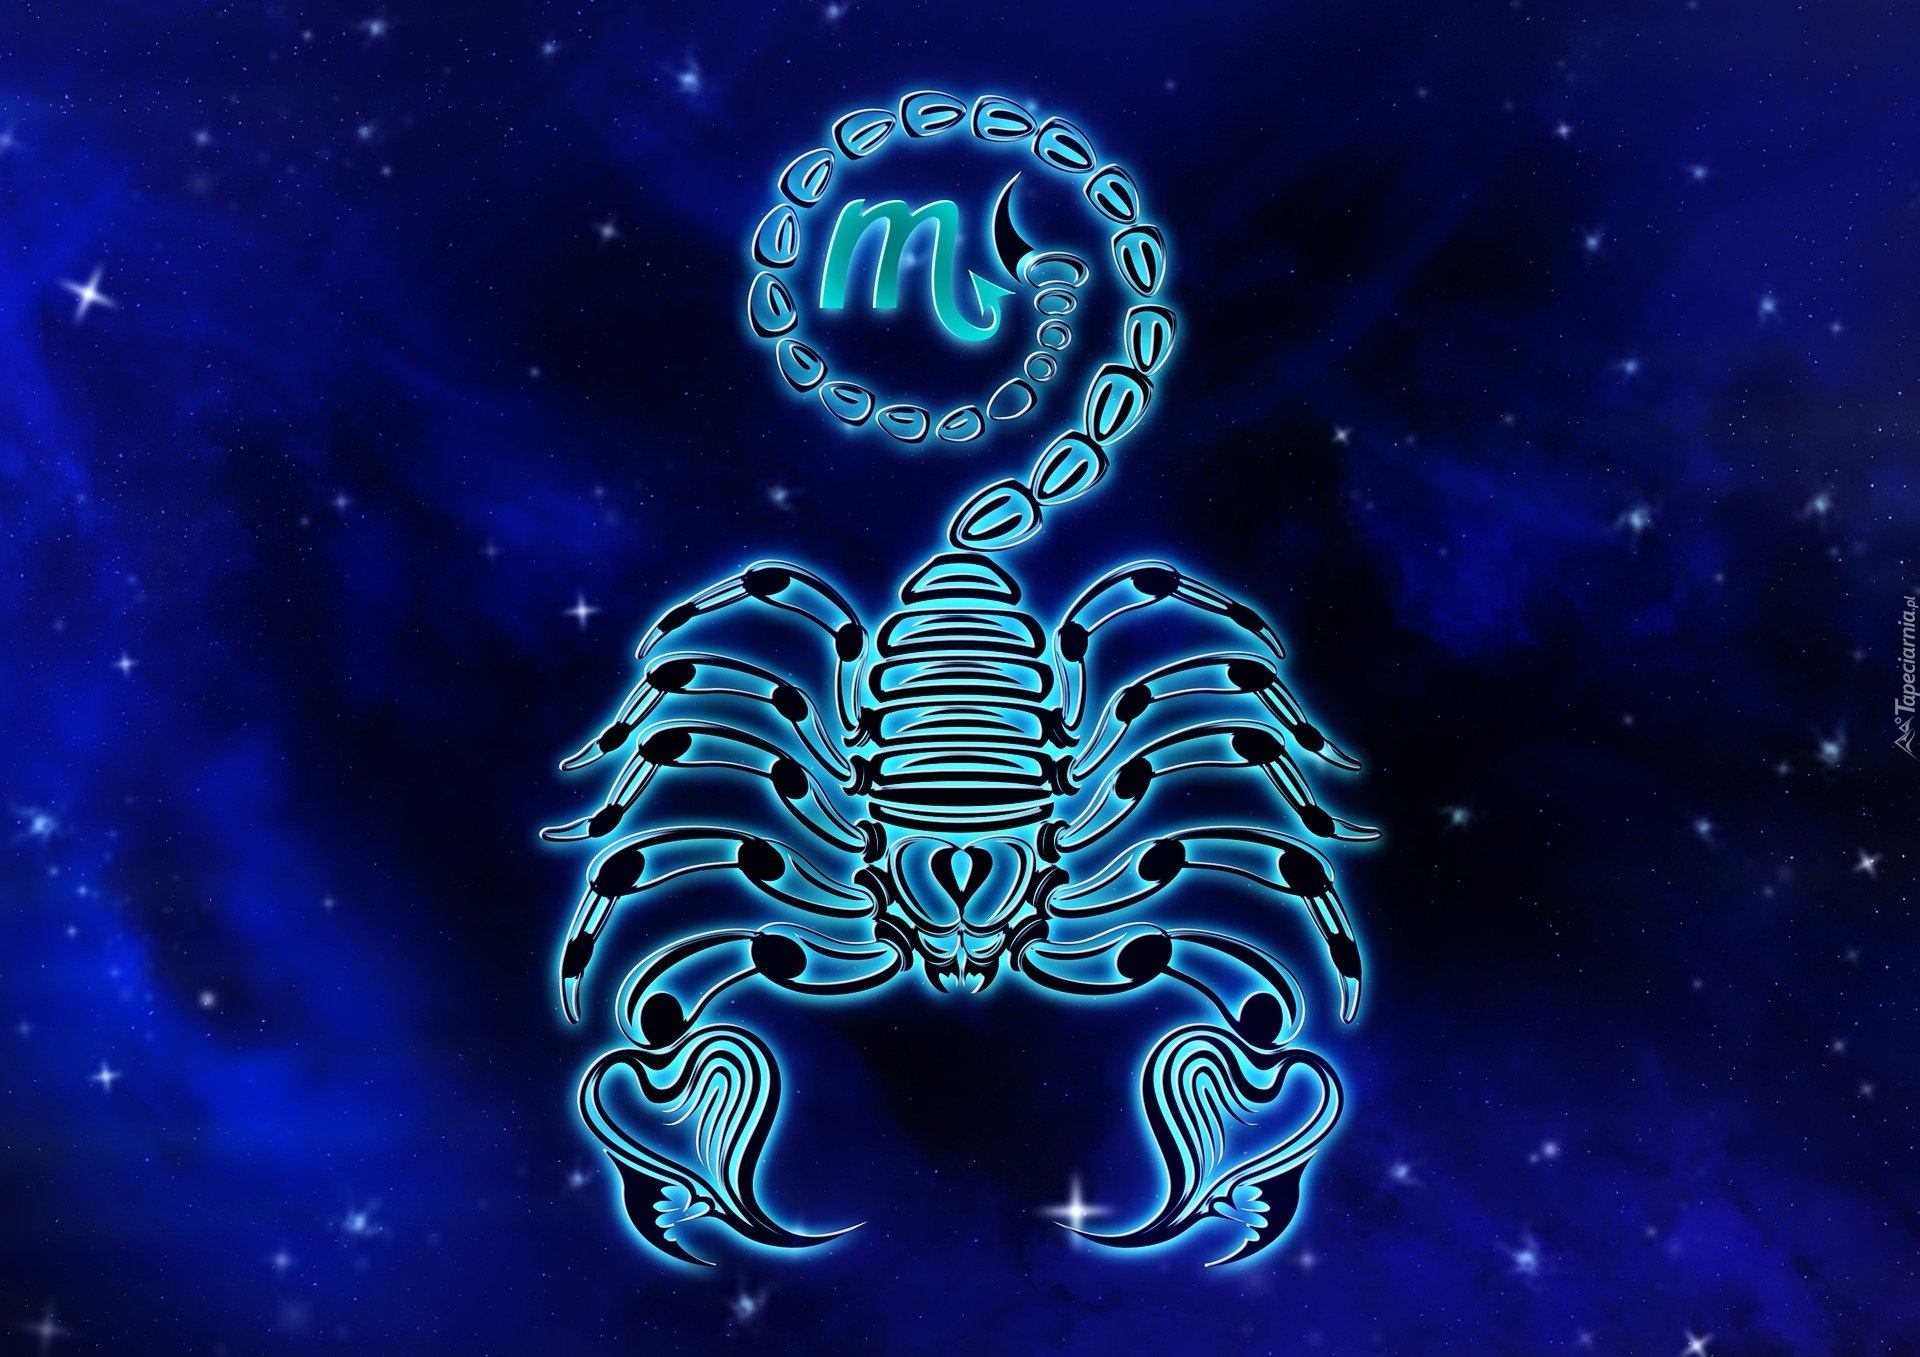 Znak zodiaku, Skorpion